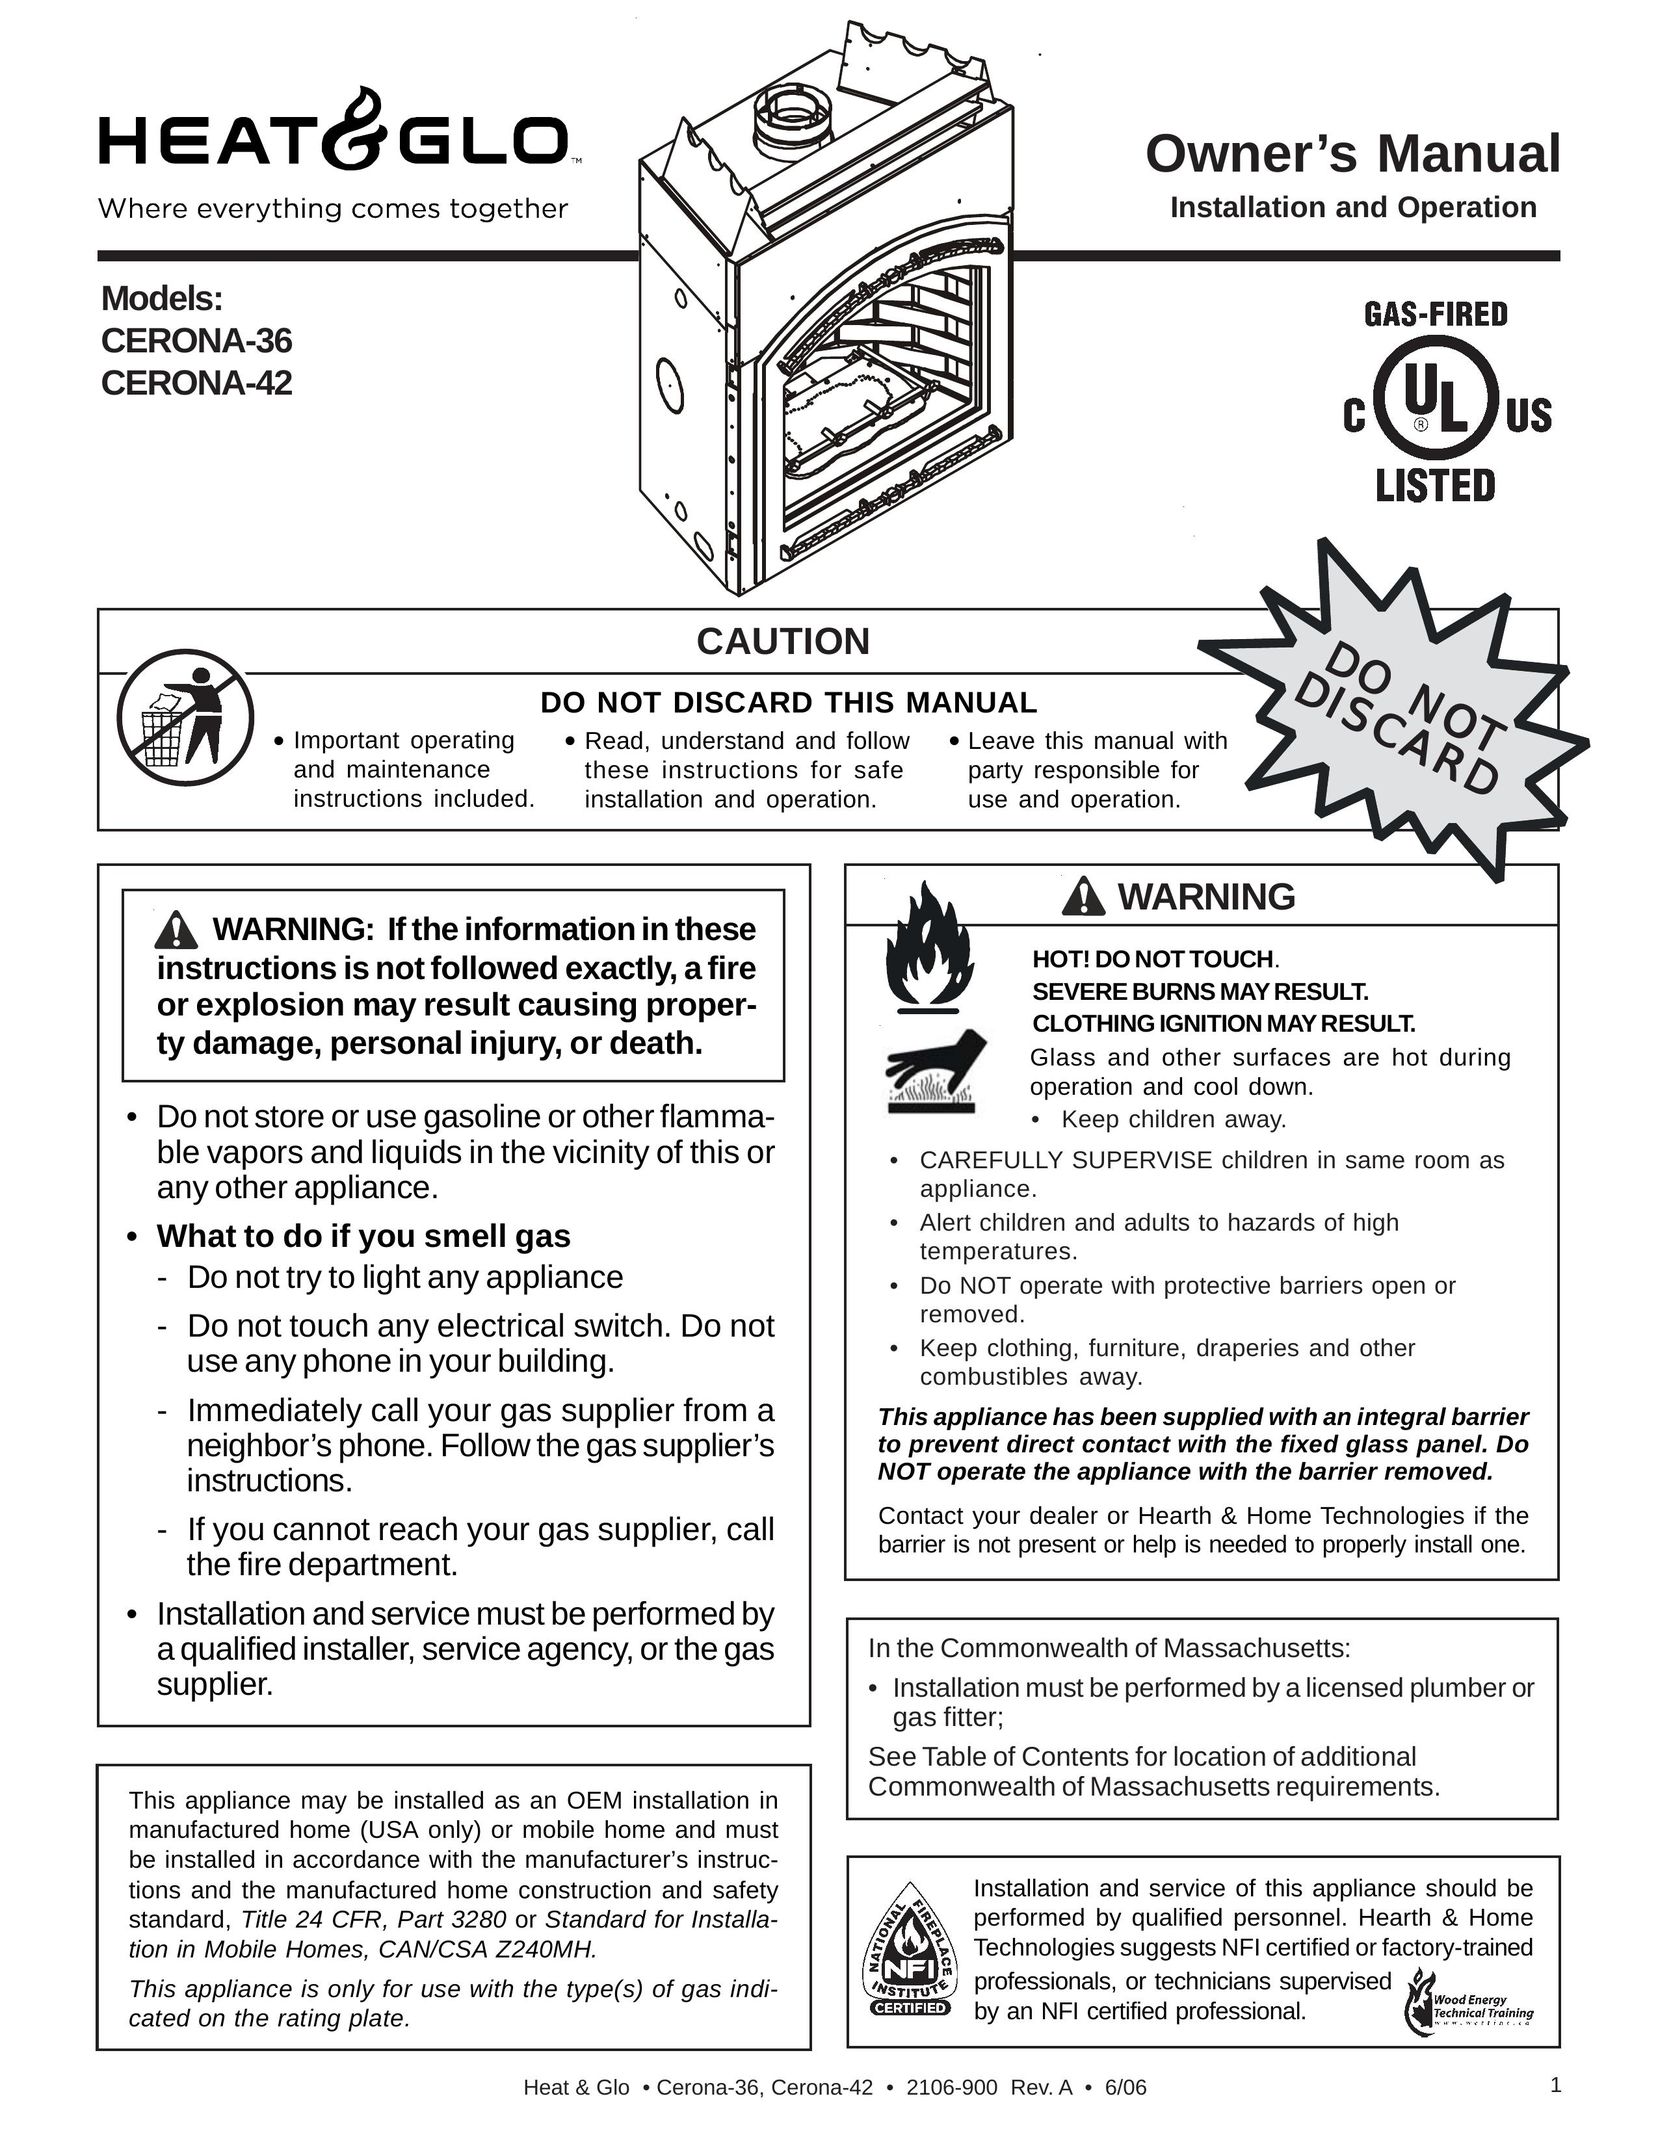 Heat & Glo LifeStyle CERONA-36 Gas Heater User Manual